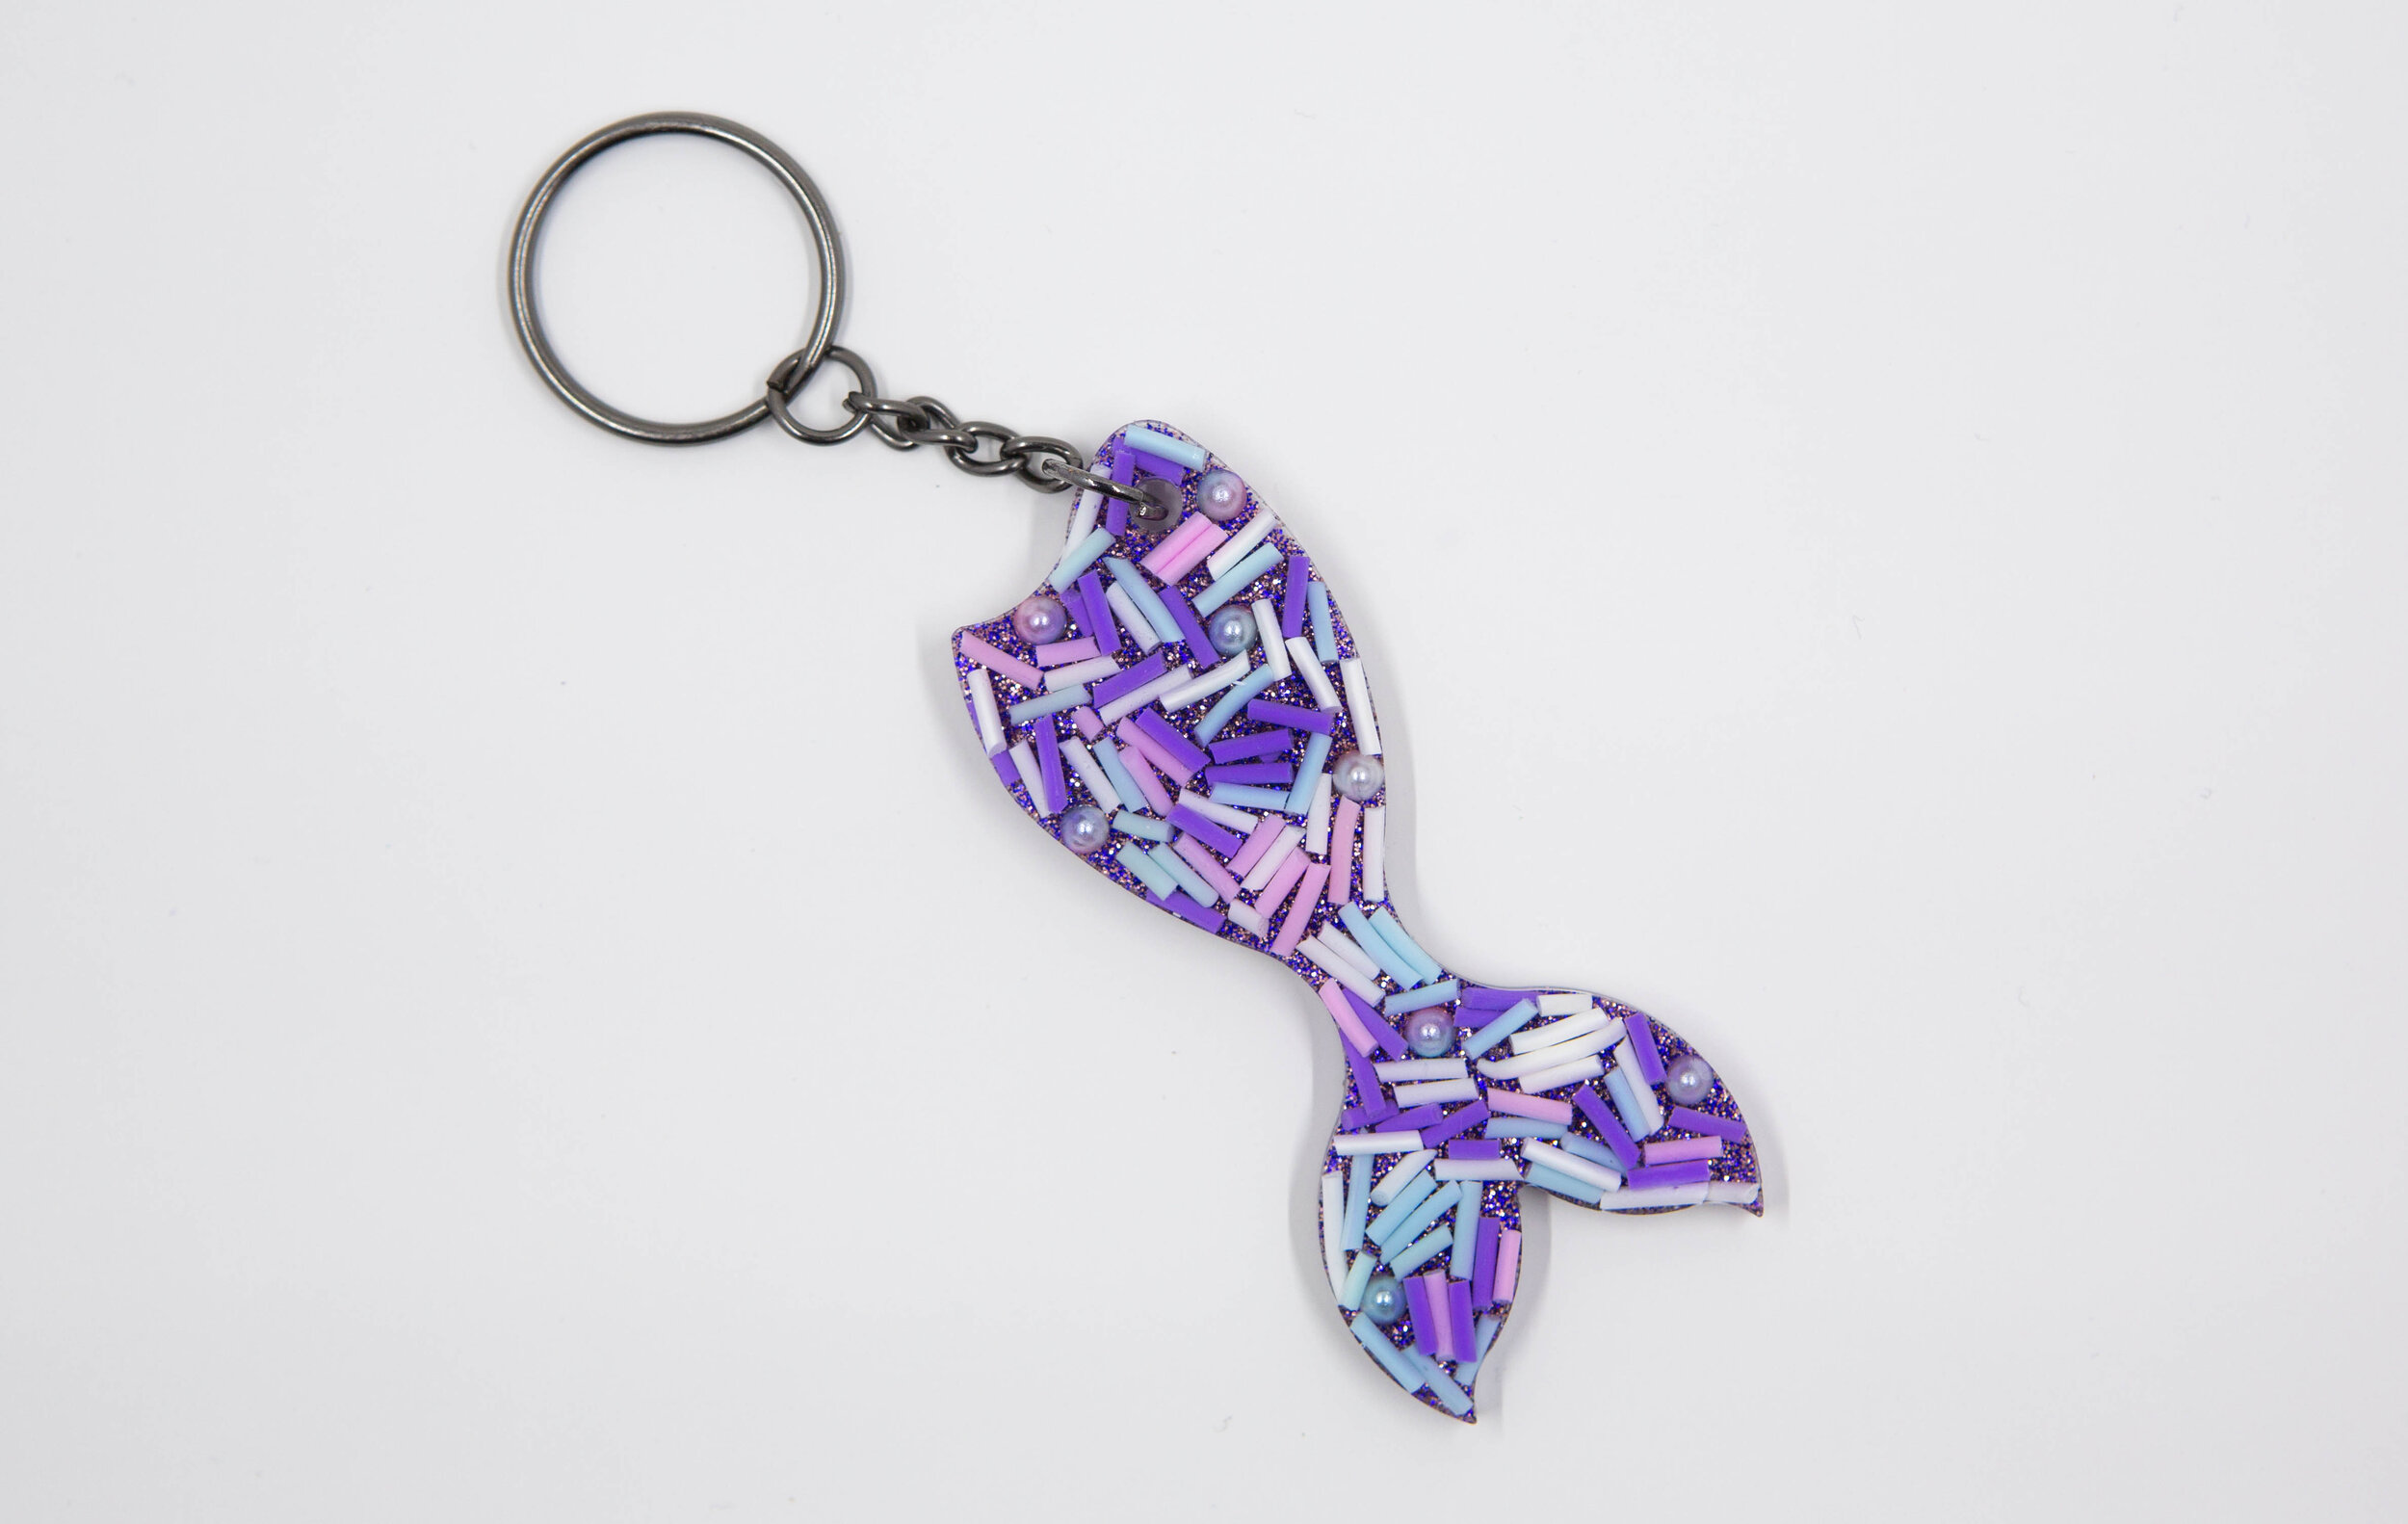 Mermaid Pearls keychain